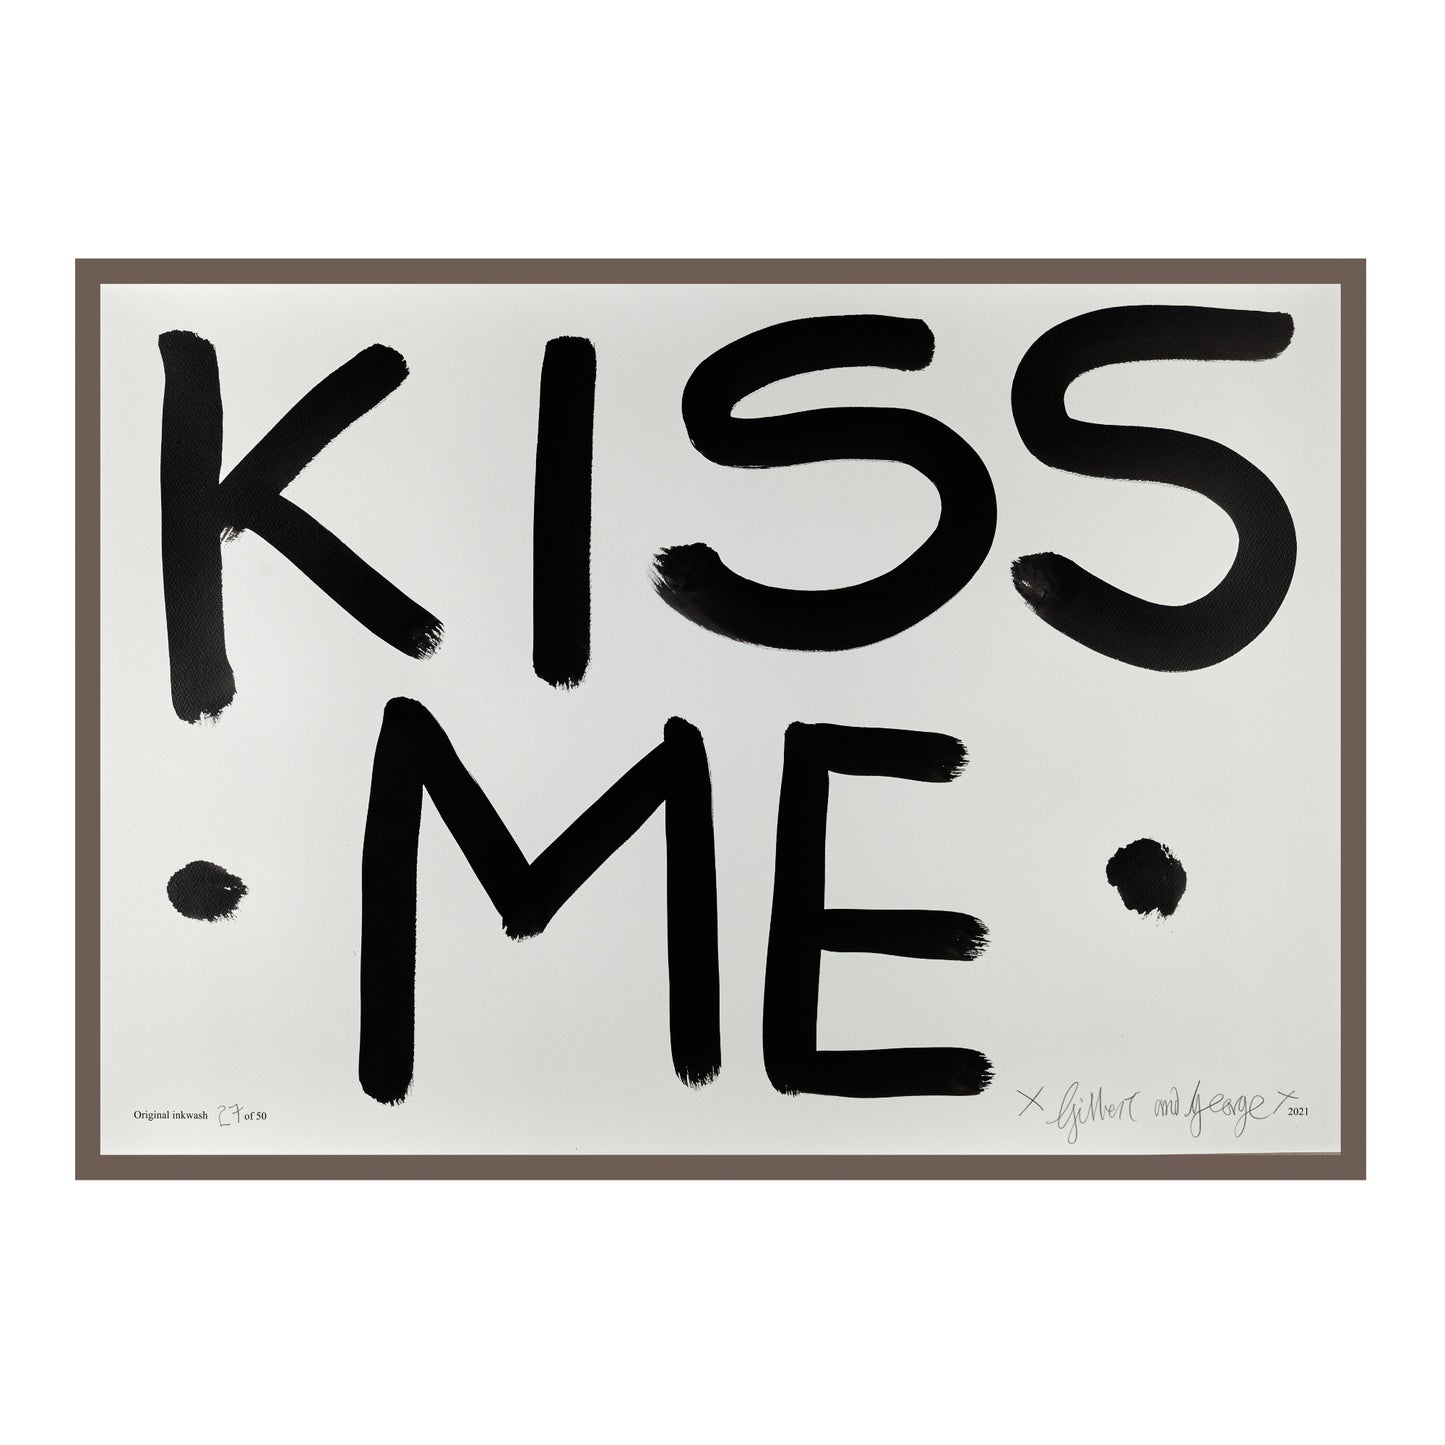 KISS ME (BLACK)